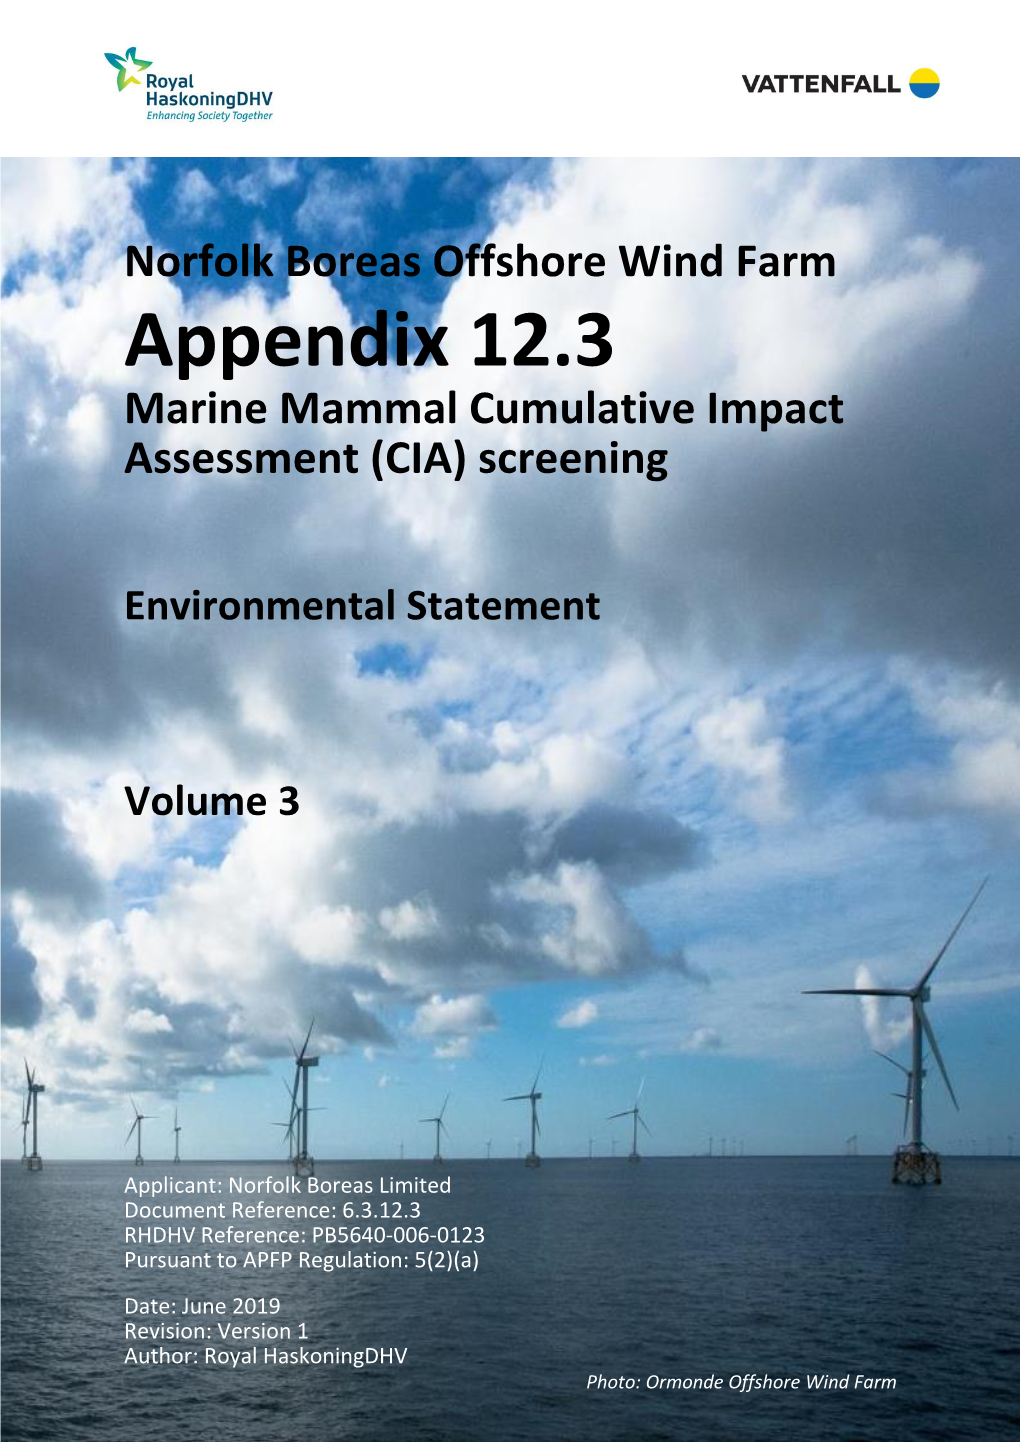 Norfolk Boreas Offshore Wind Farm Appendix 12.3 Marine Mammal Cumulative Impact Assessment (CIA) Screening